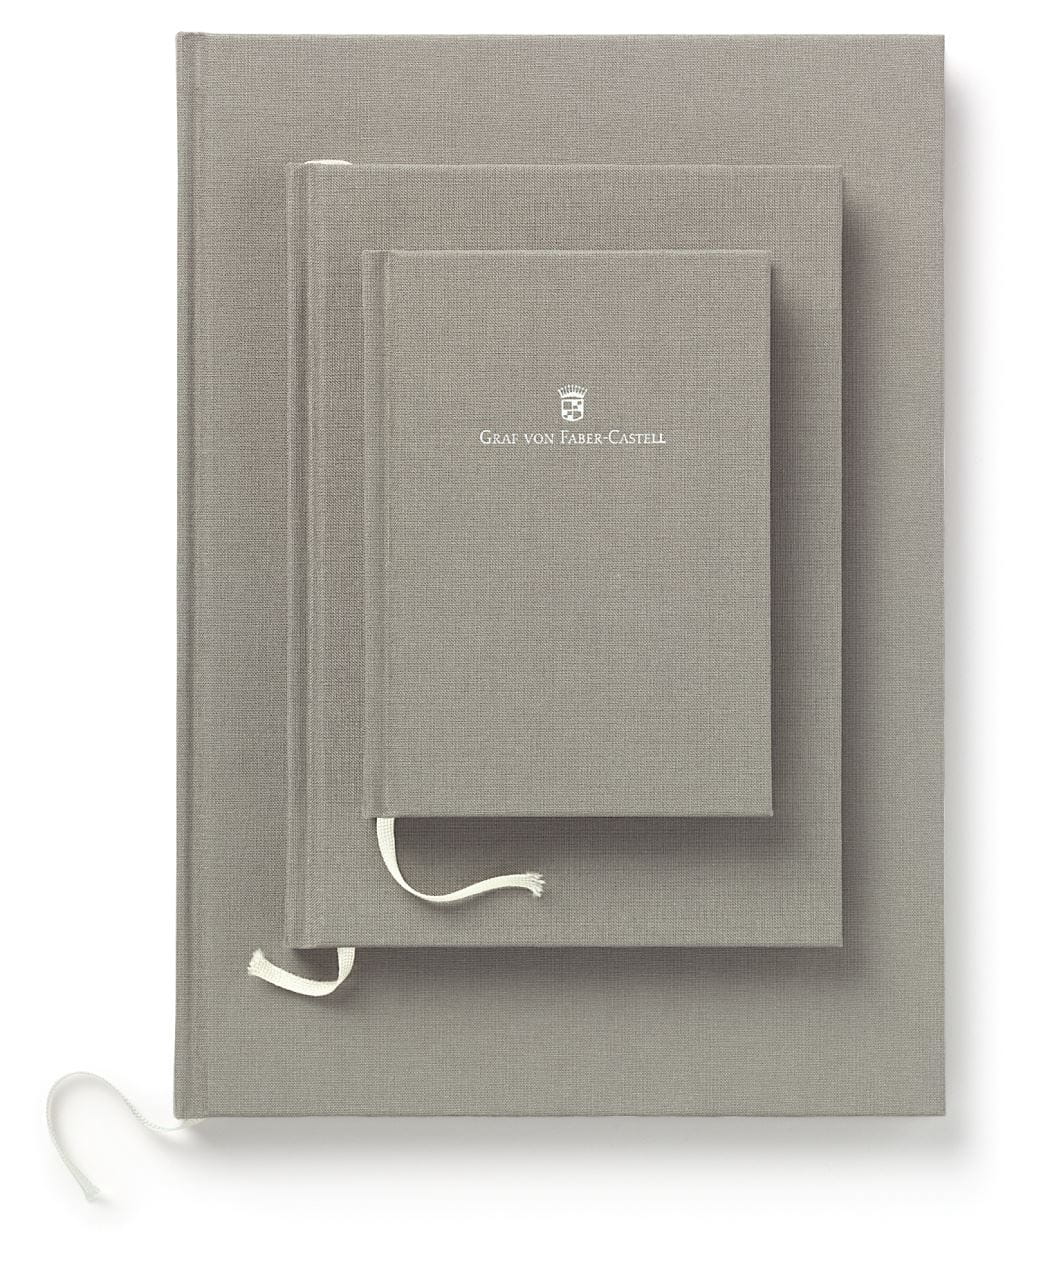 Graf-von-Faber-Castell - Recharge cahier relie lin A4, Gris